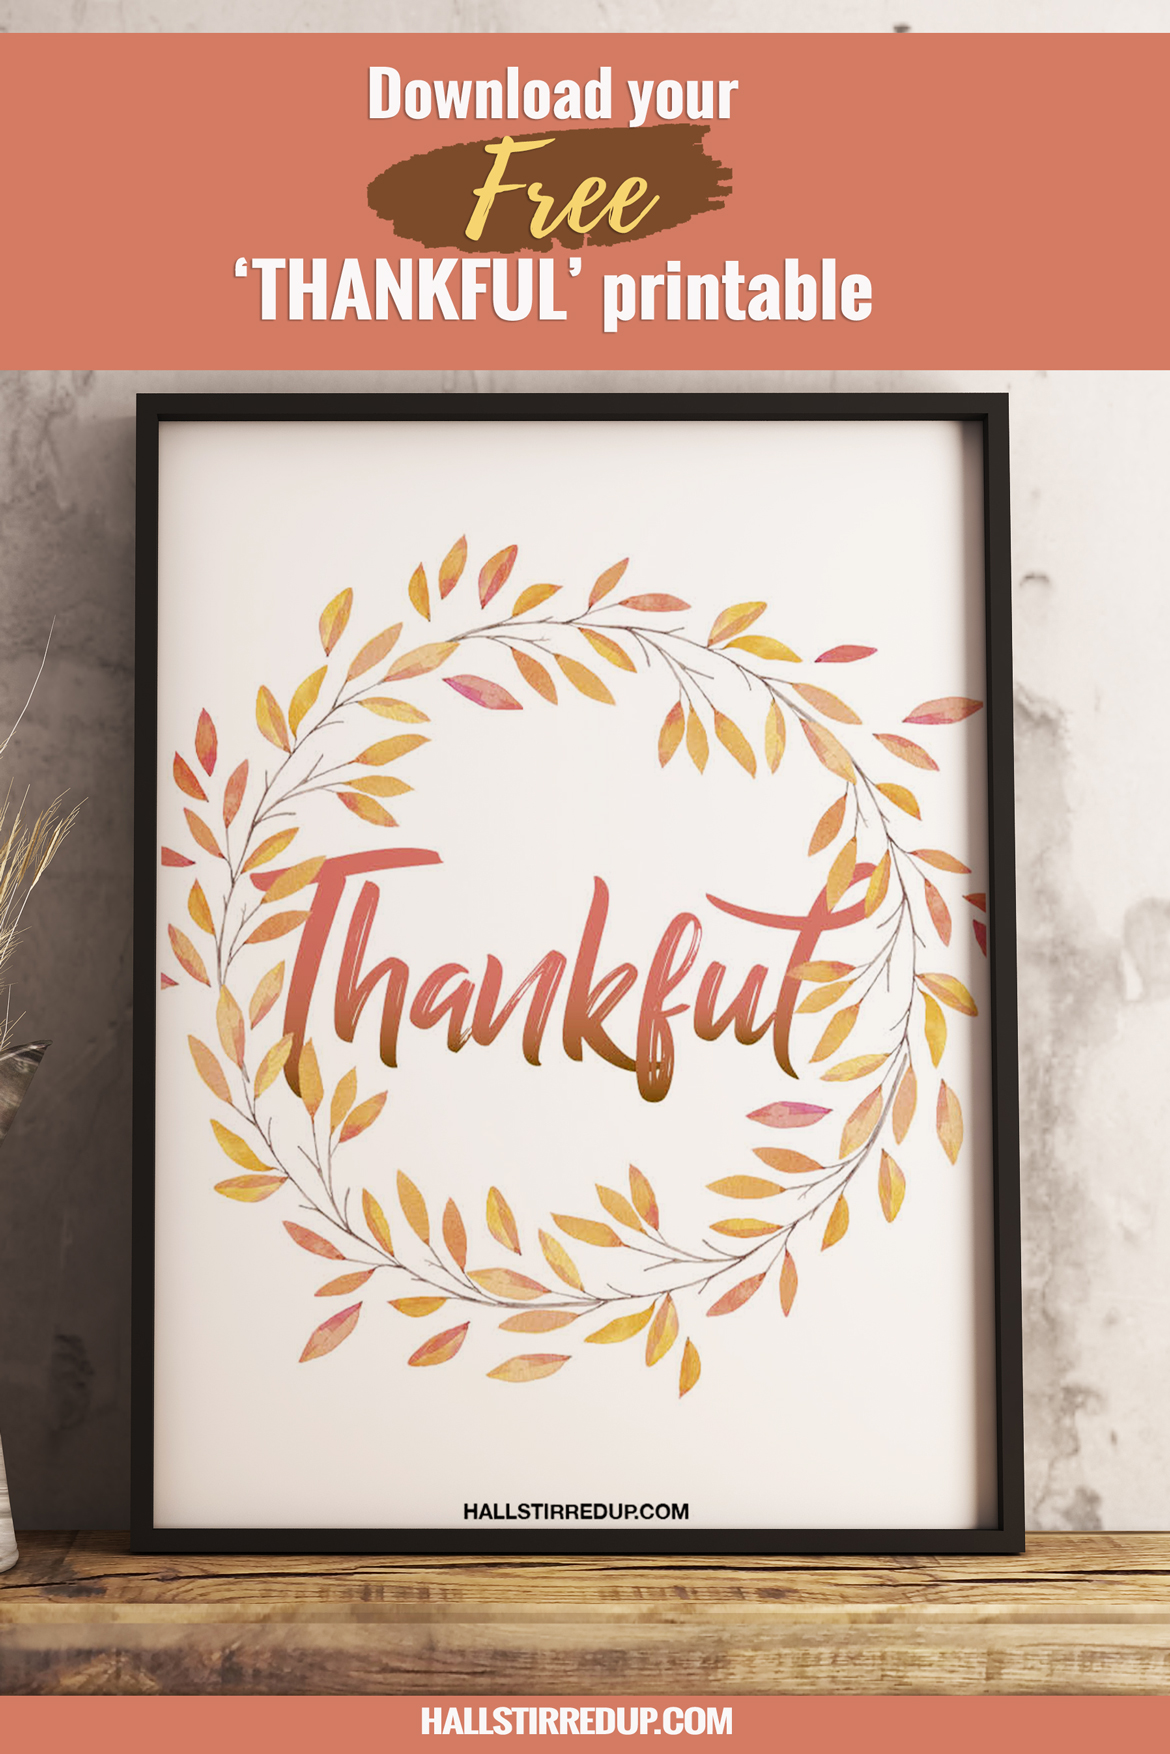 Thankful, grateful, and blessed! Free printable from HallStirredUp.com